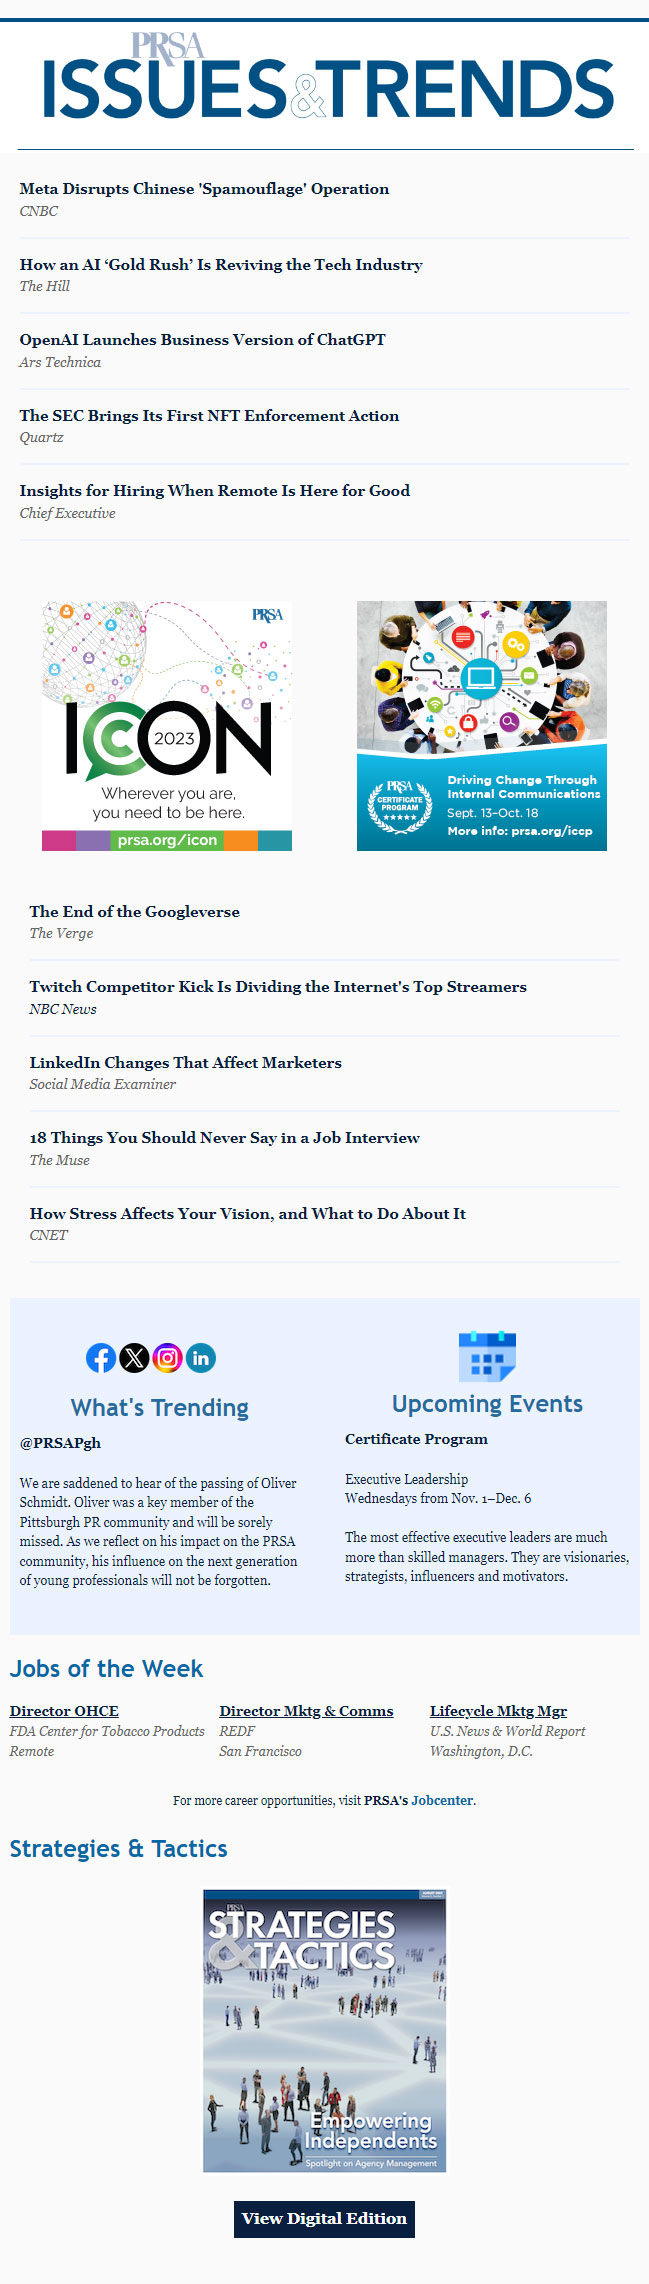 Issues & Trends Screenshot